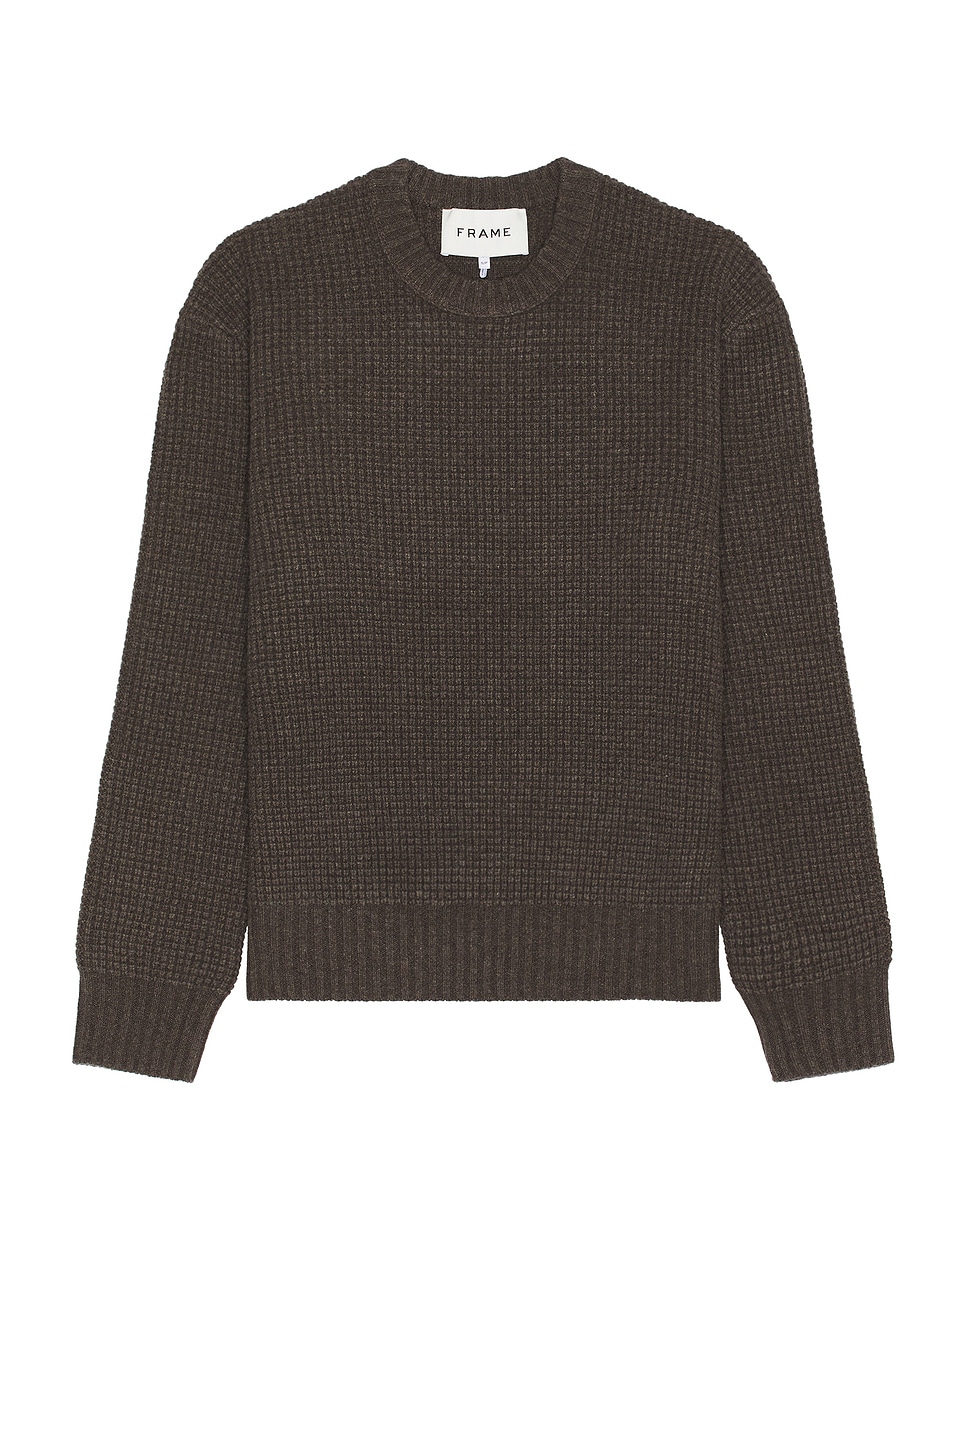 Image 1 of FRAME Wool Turtleneck Sweater in Mole